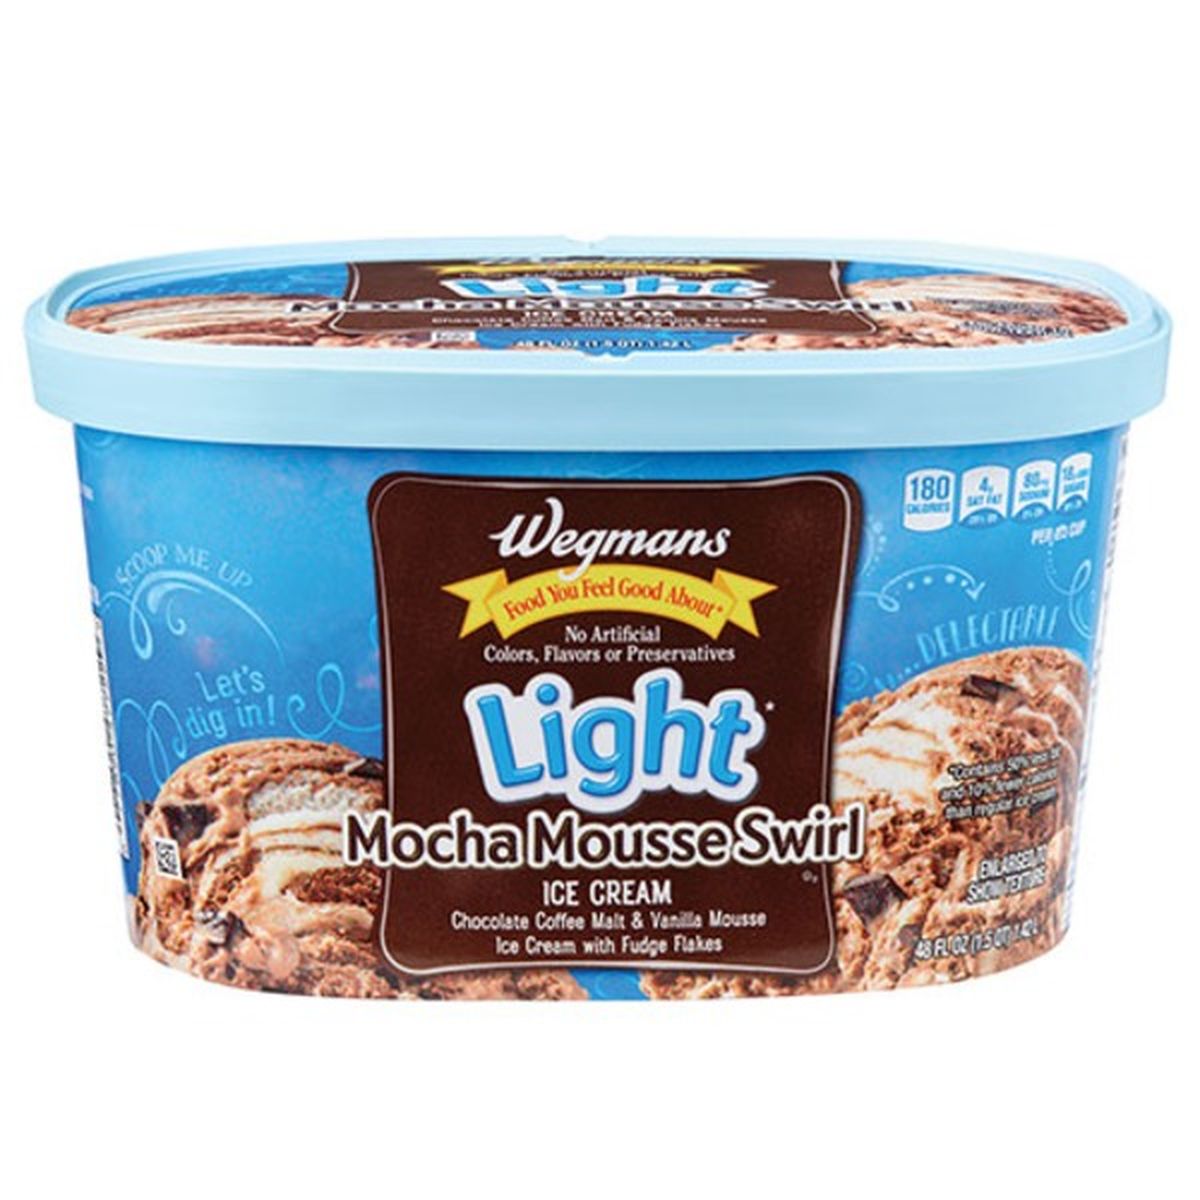 Calories in Wegmans Light* Mocha Mousse Swirl Ice Cream